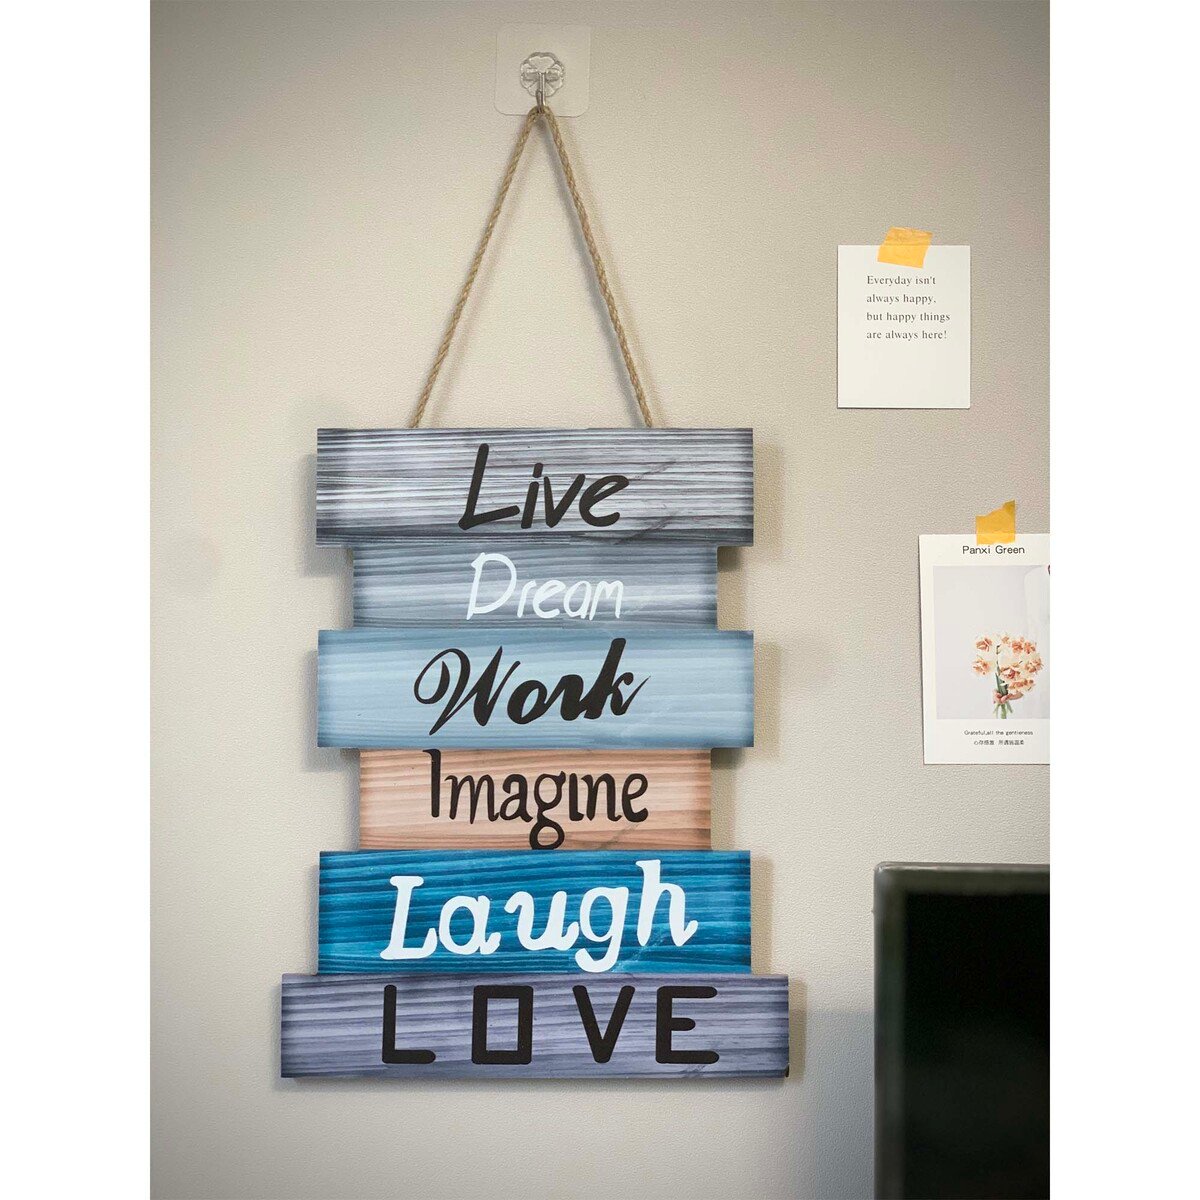 Maple Leaf Rustic Live Dream Work Imagine Laugh Love Sign Wooden Wall Hanging Art Decor, 39 x 30 cm, 20YX04